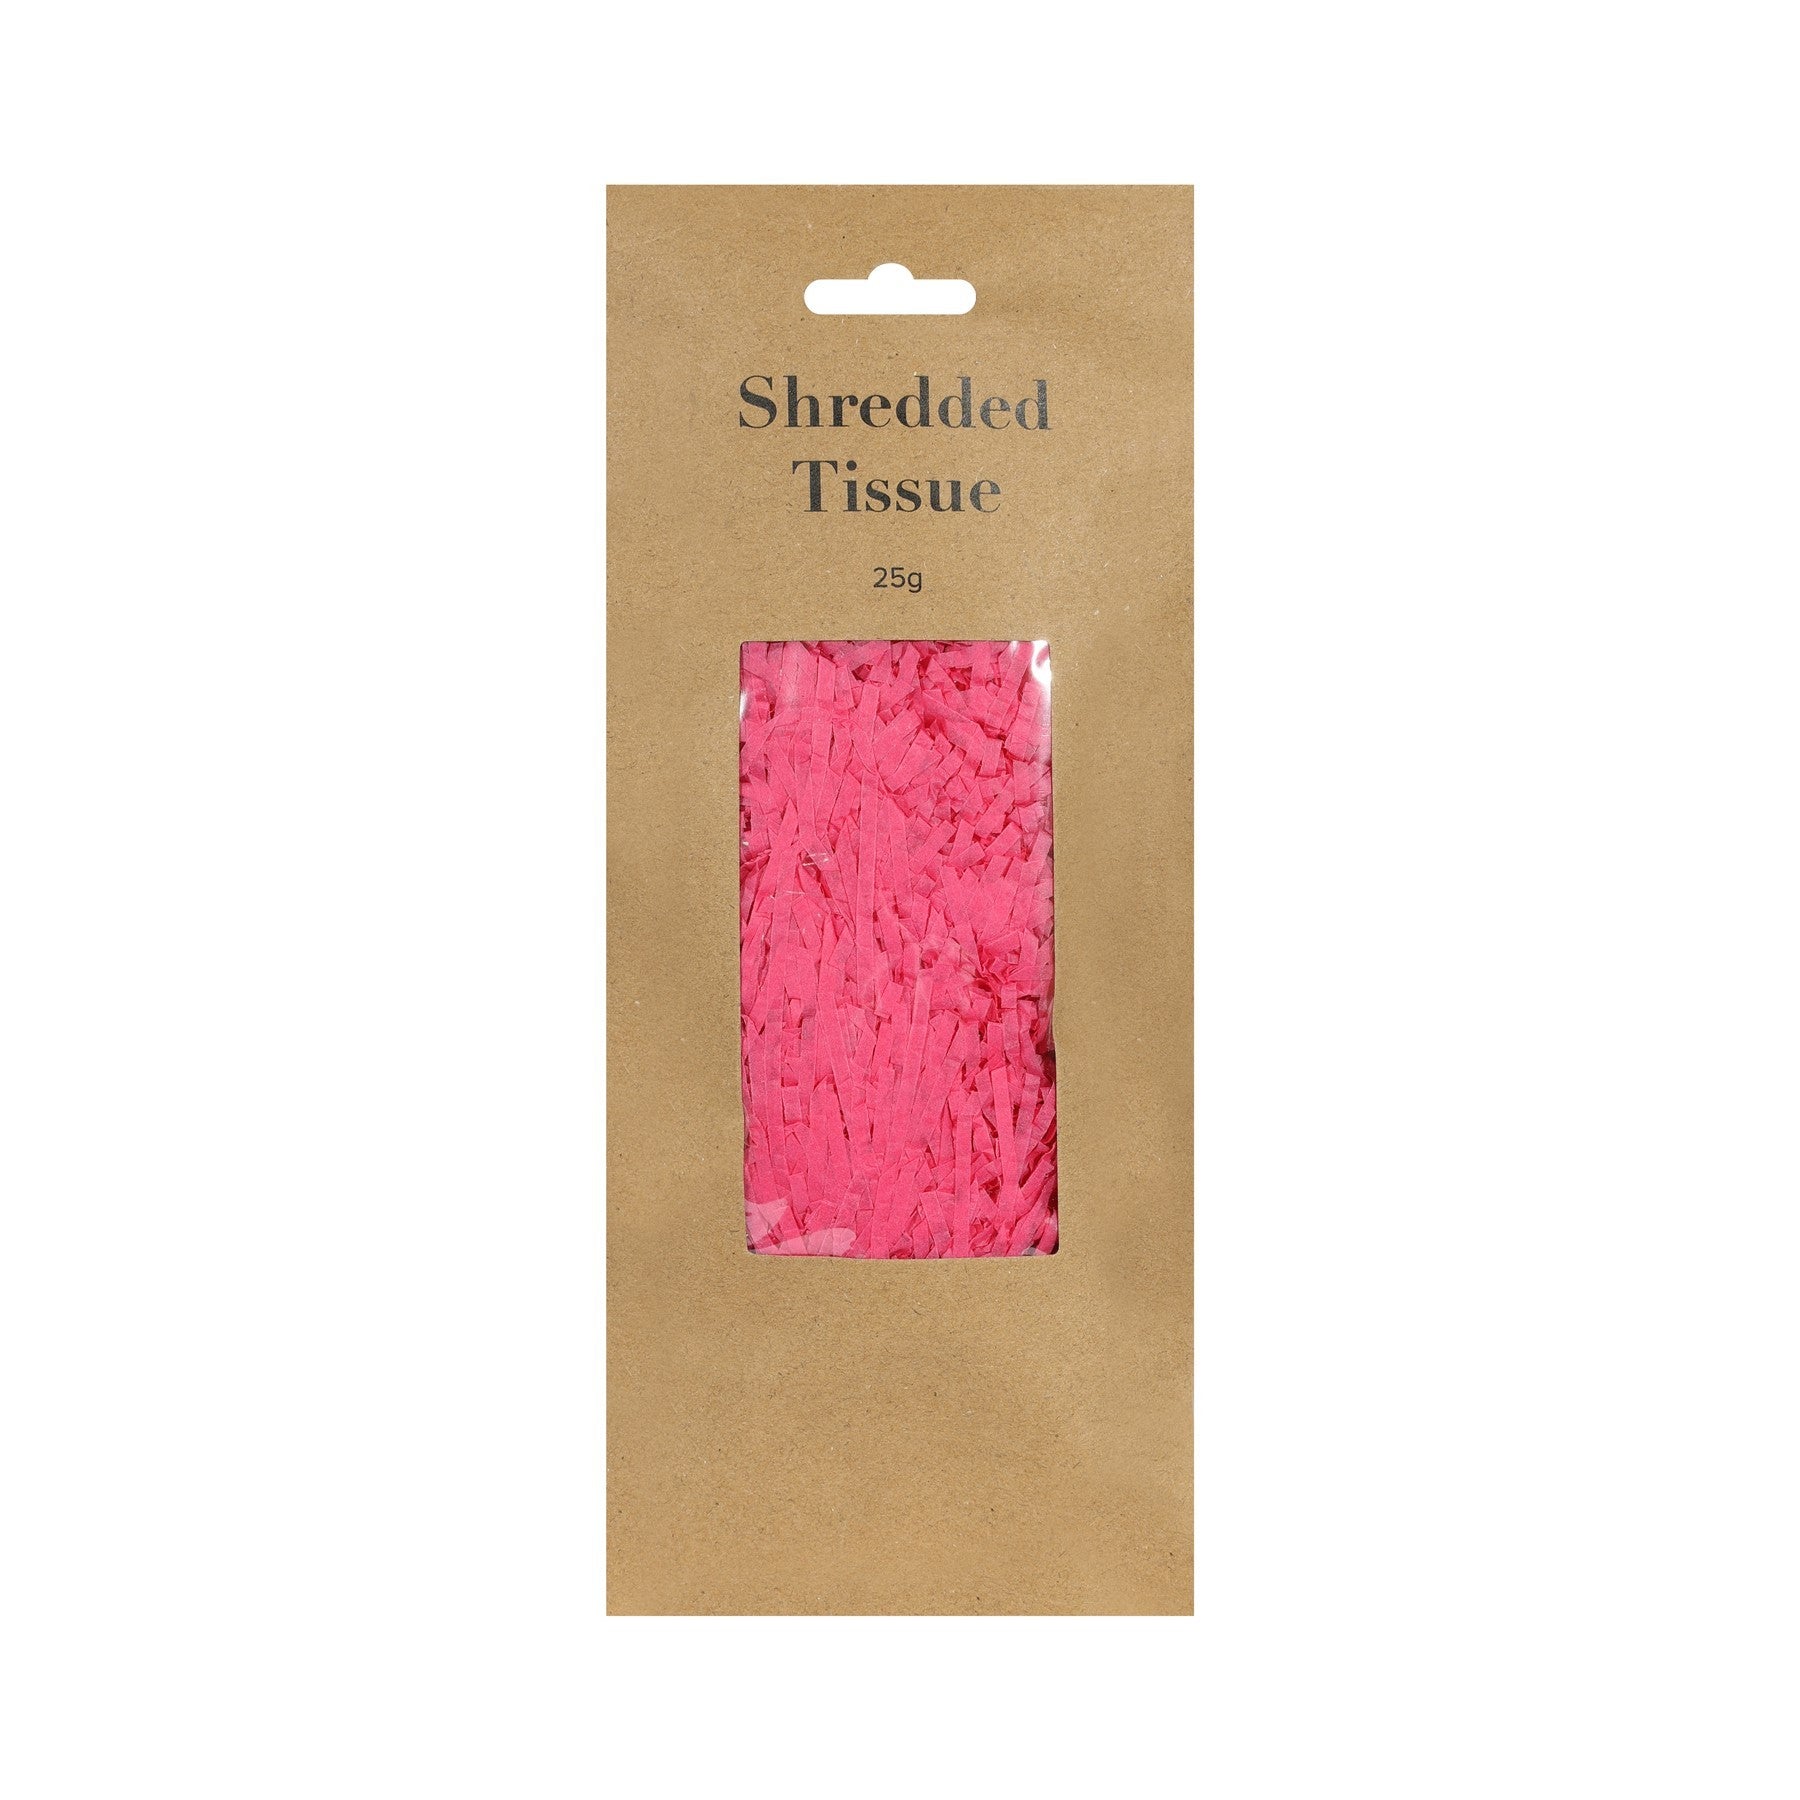 View Pink Shredded Tissue 25 grams information